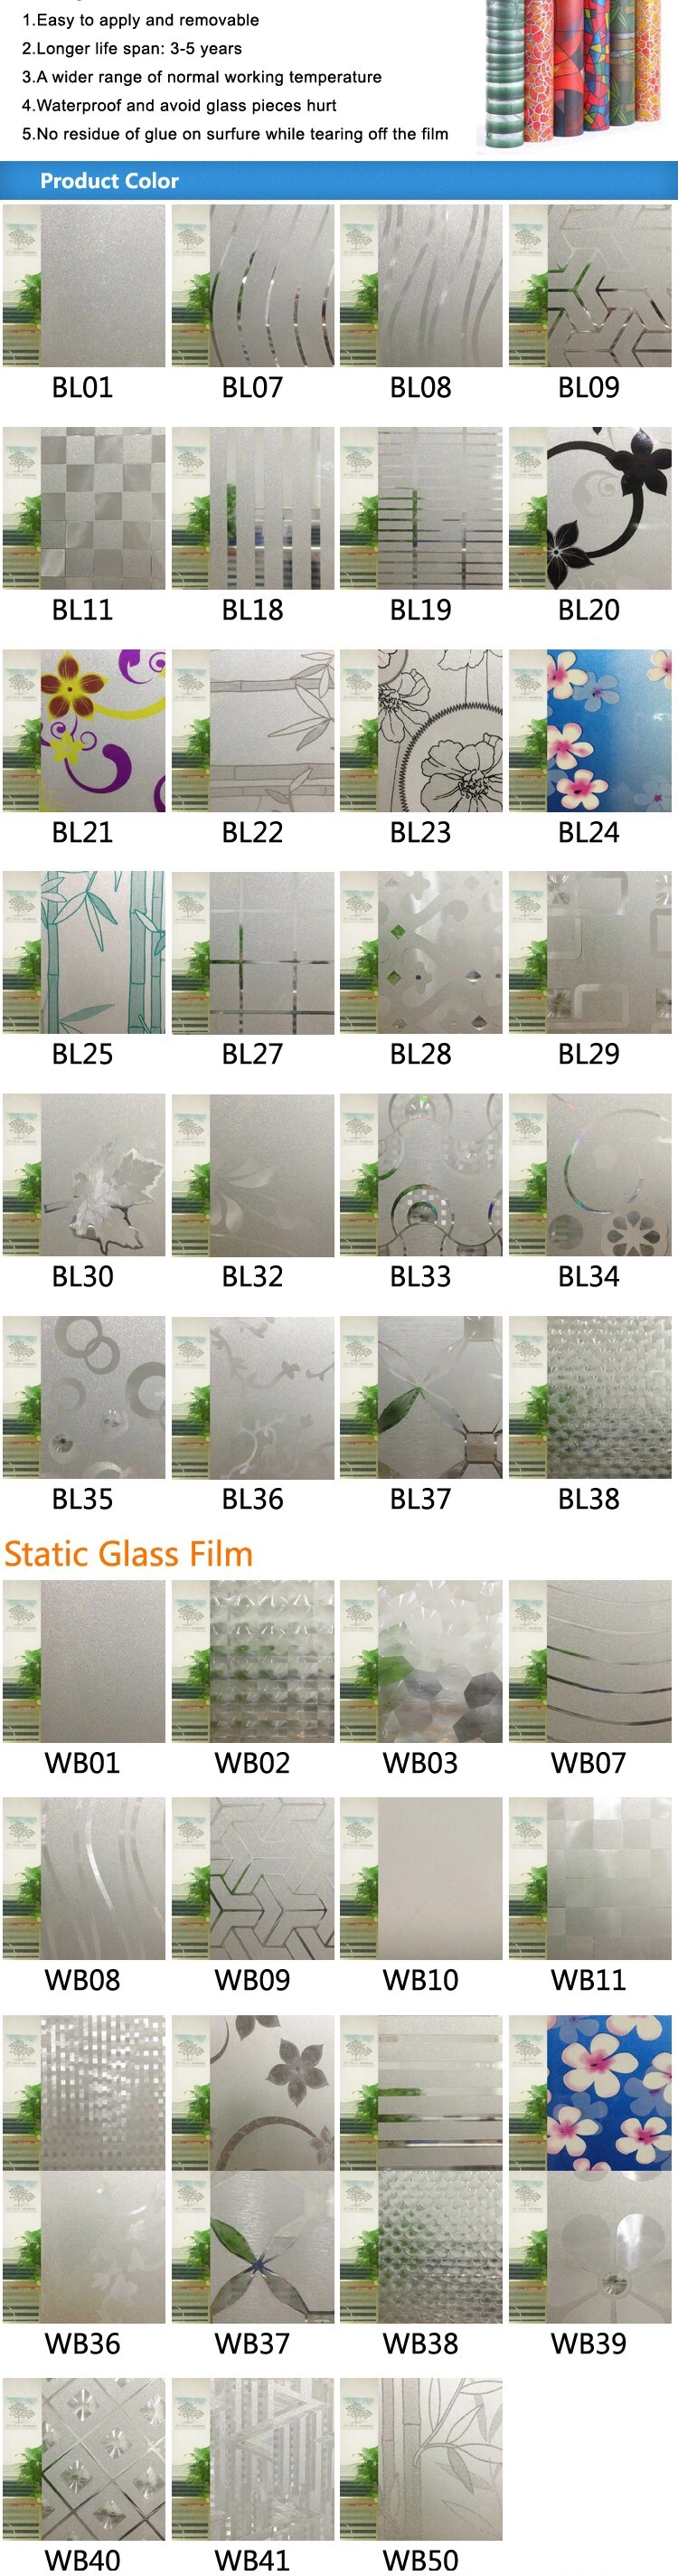 Decorative Static Window Film Wholesale Vinyl Home Decoration PVC Self Adhesive Film